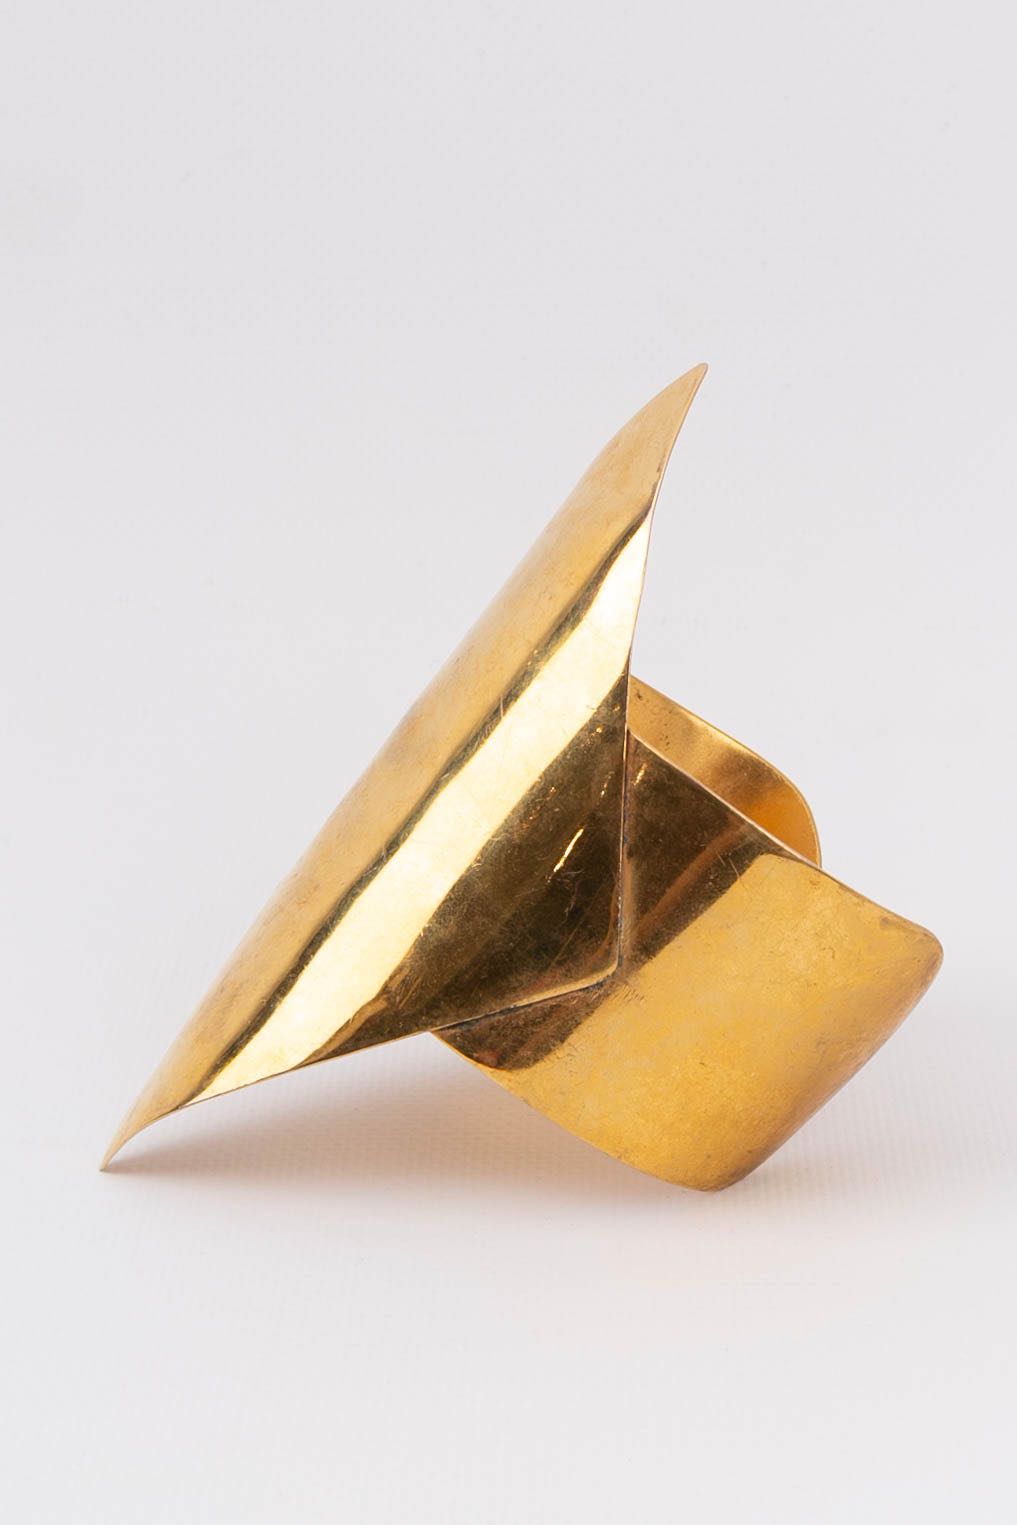 Roger Scemama gilded metal cuff bracelet